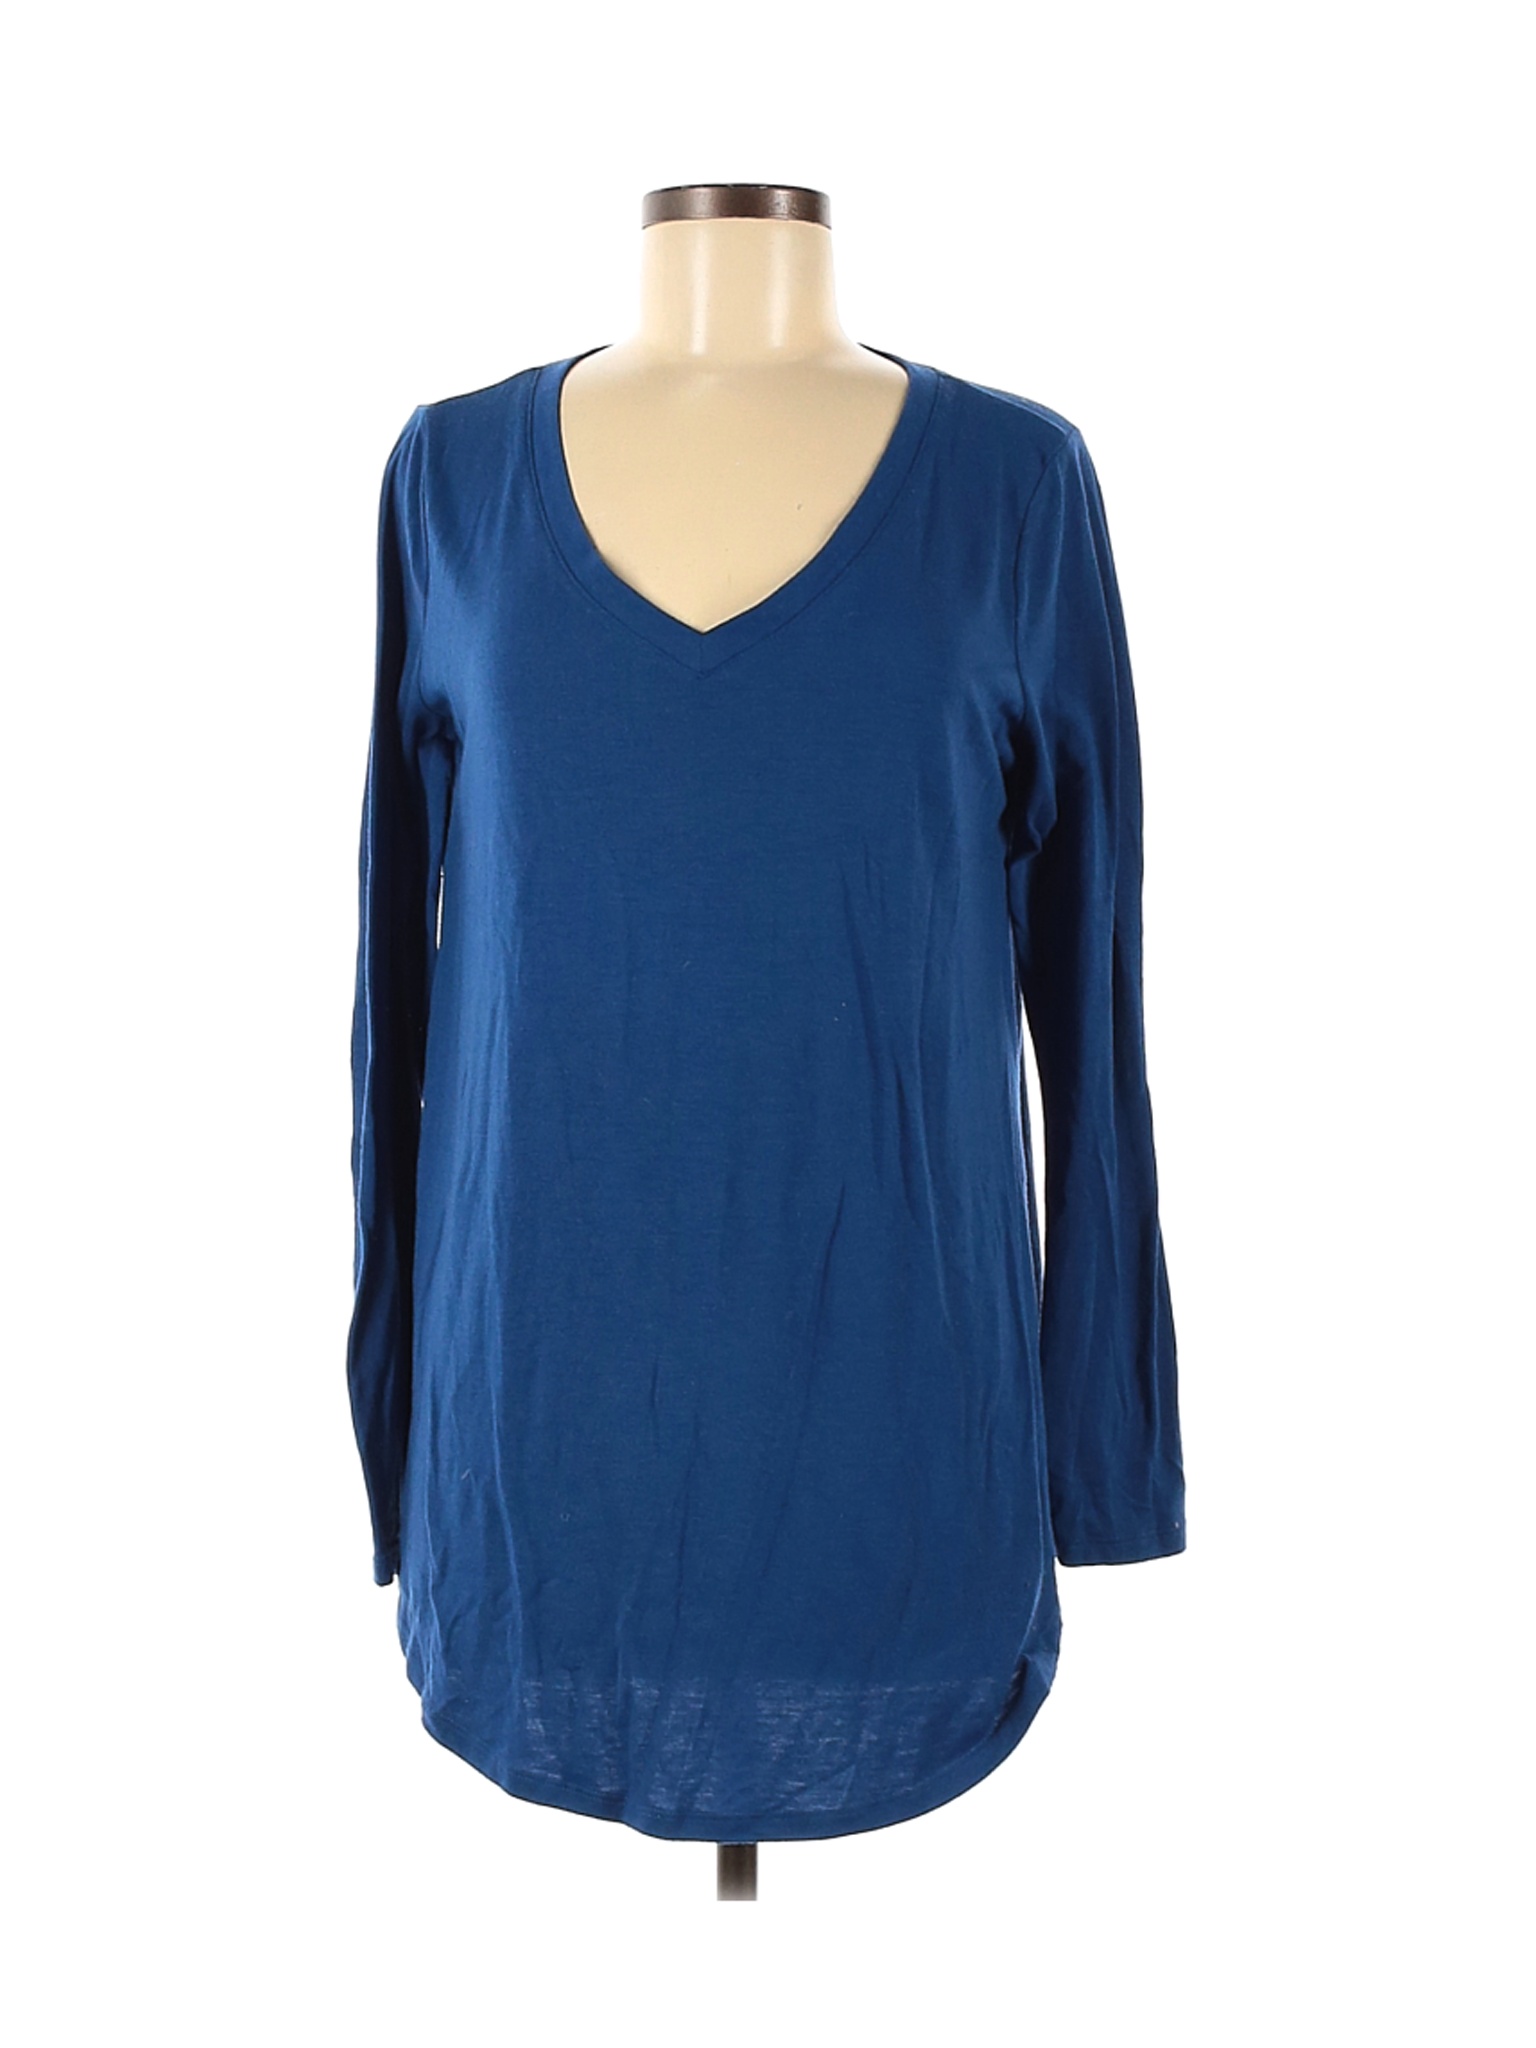 Zenana Premium Women Blue Long Sleeve Top M | eBay